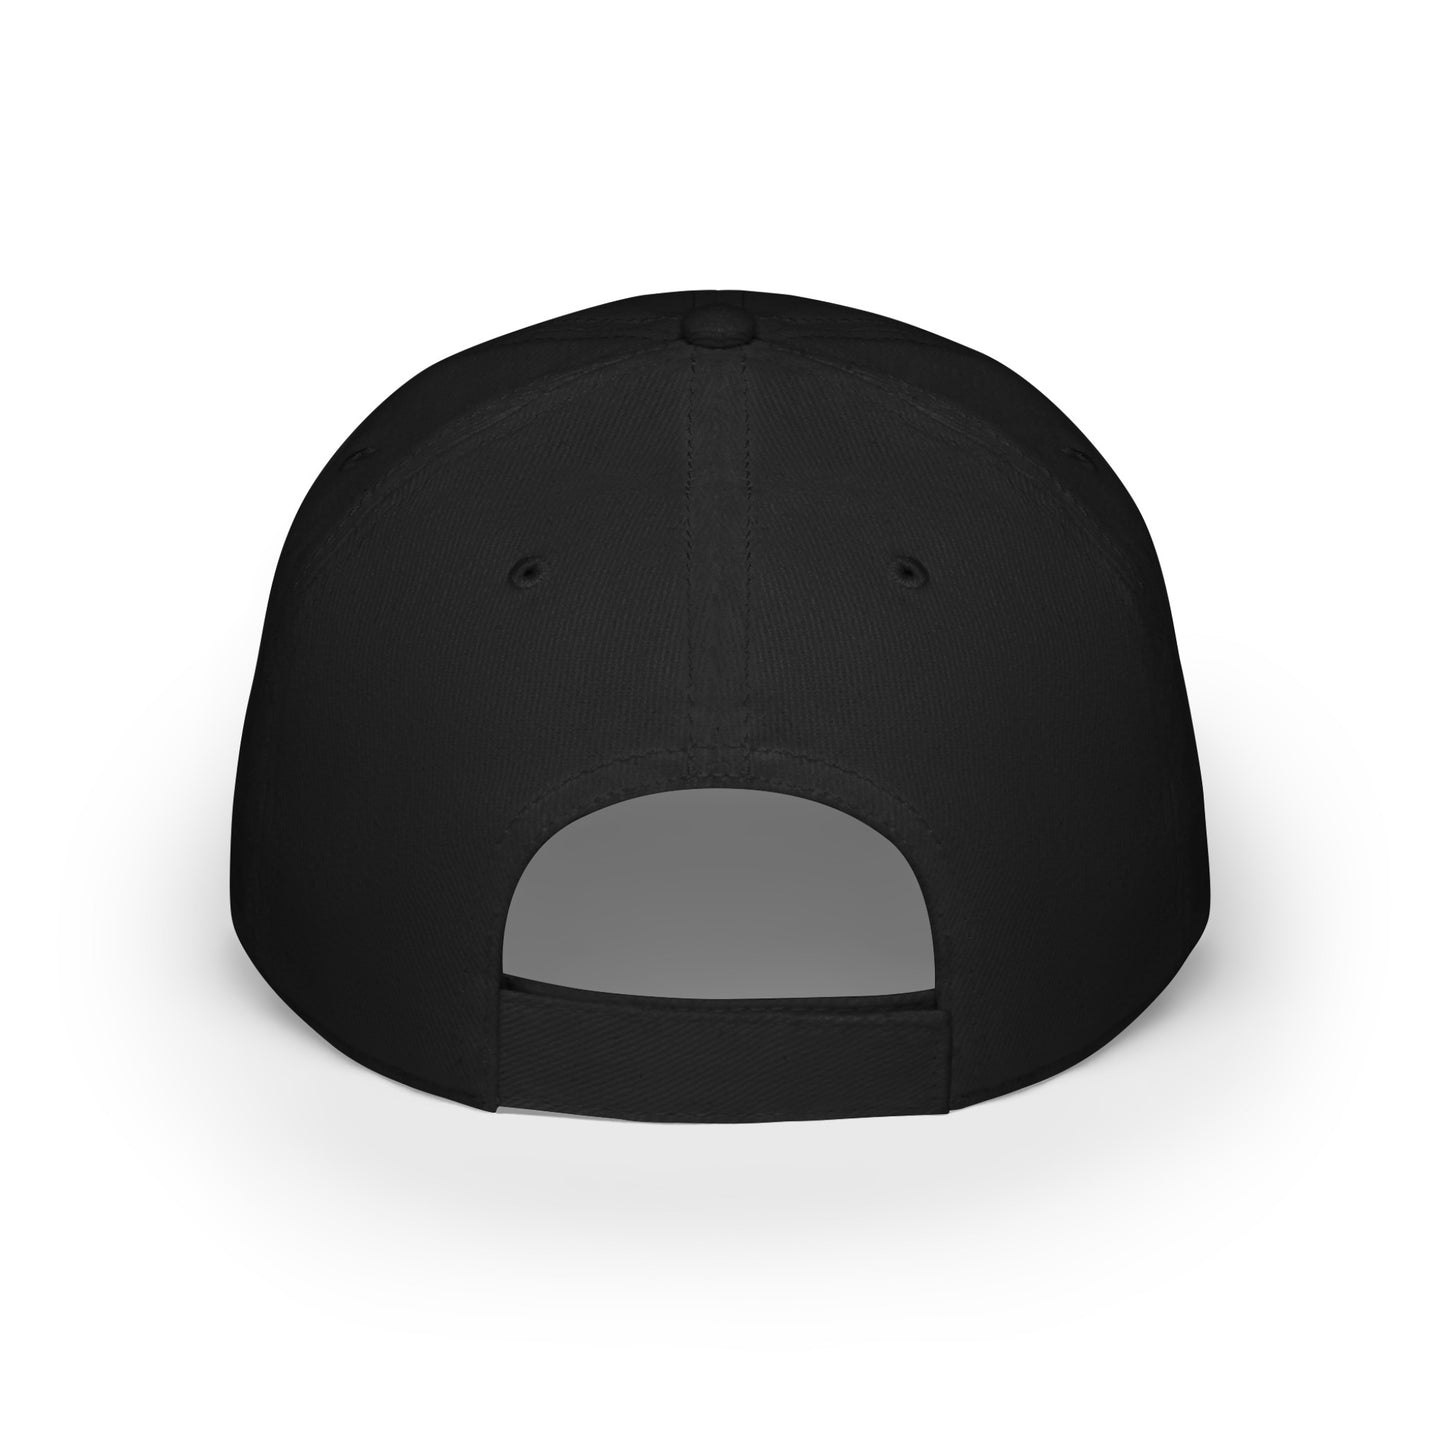 4C Logo Hat